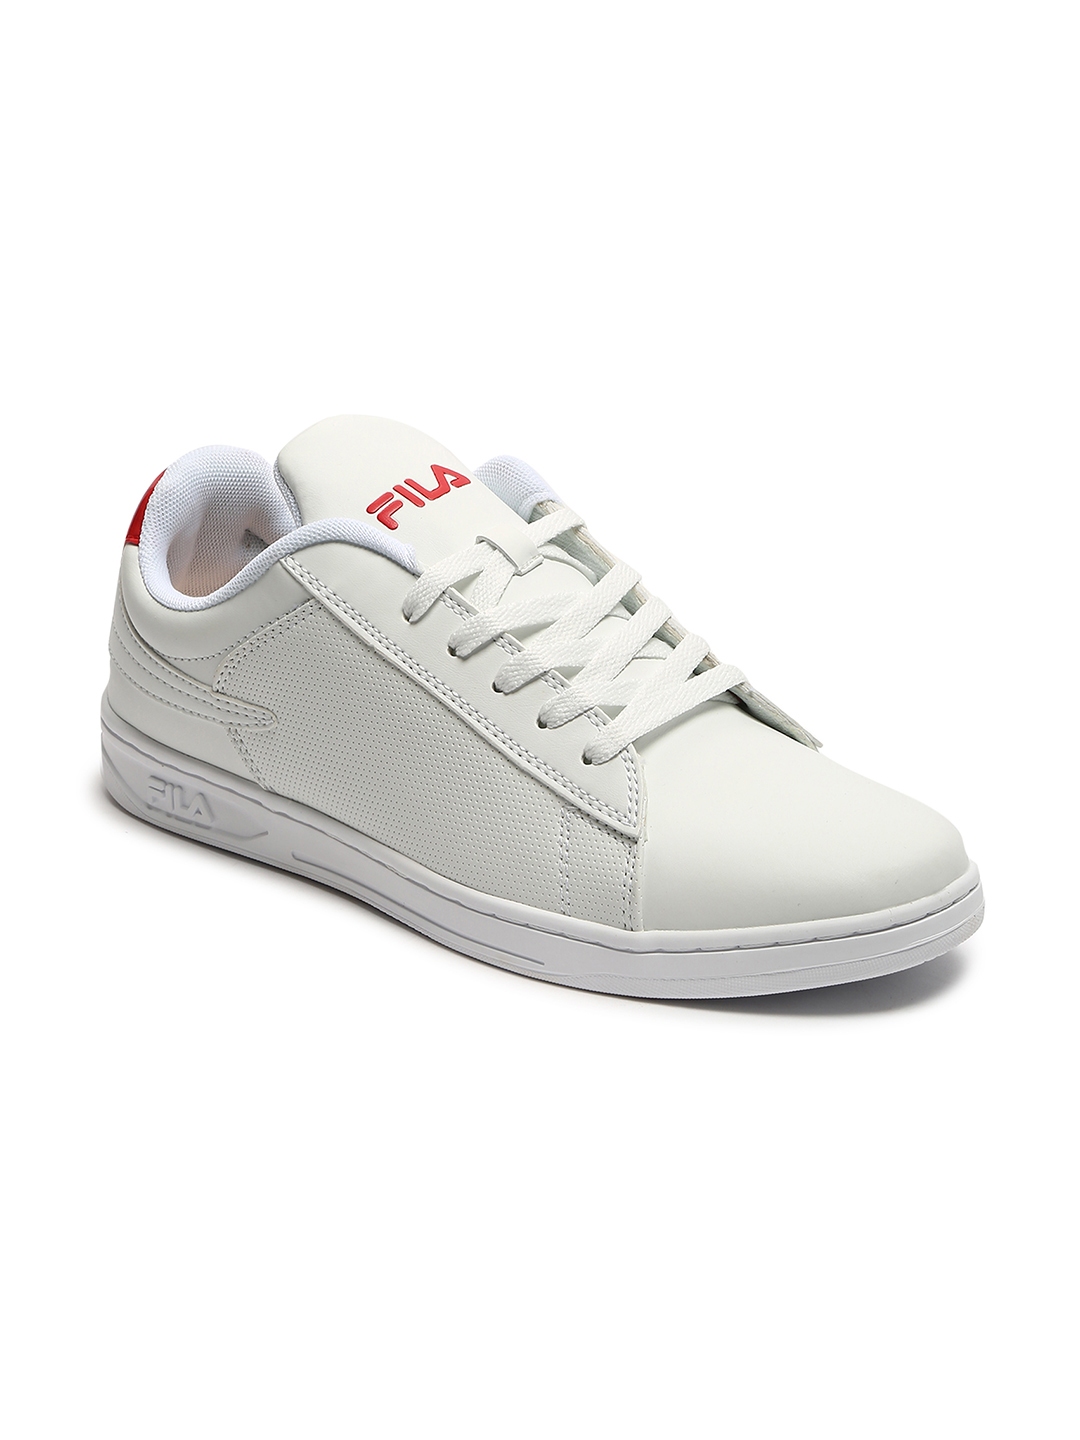 Buy FILA Men White Sneakers - Casual Shoes for Men 9247399 | Myntra